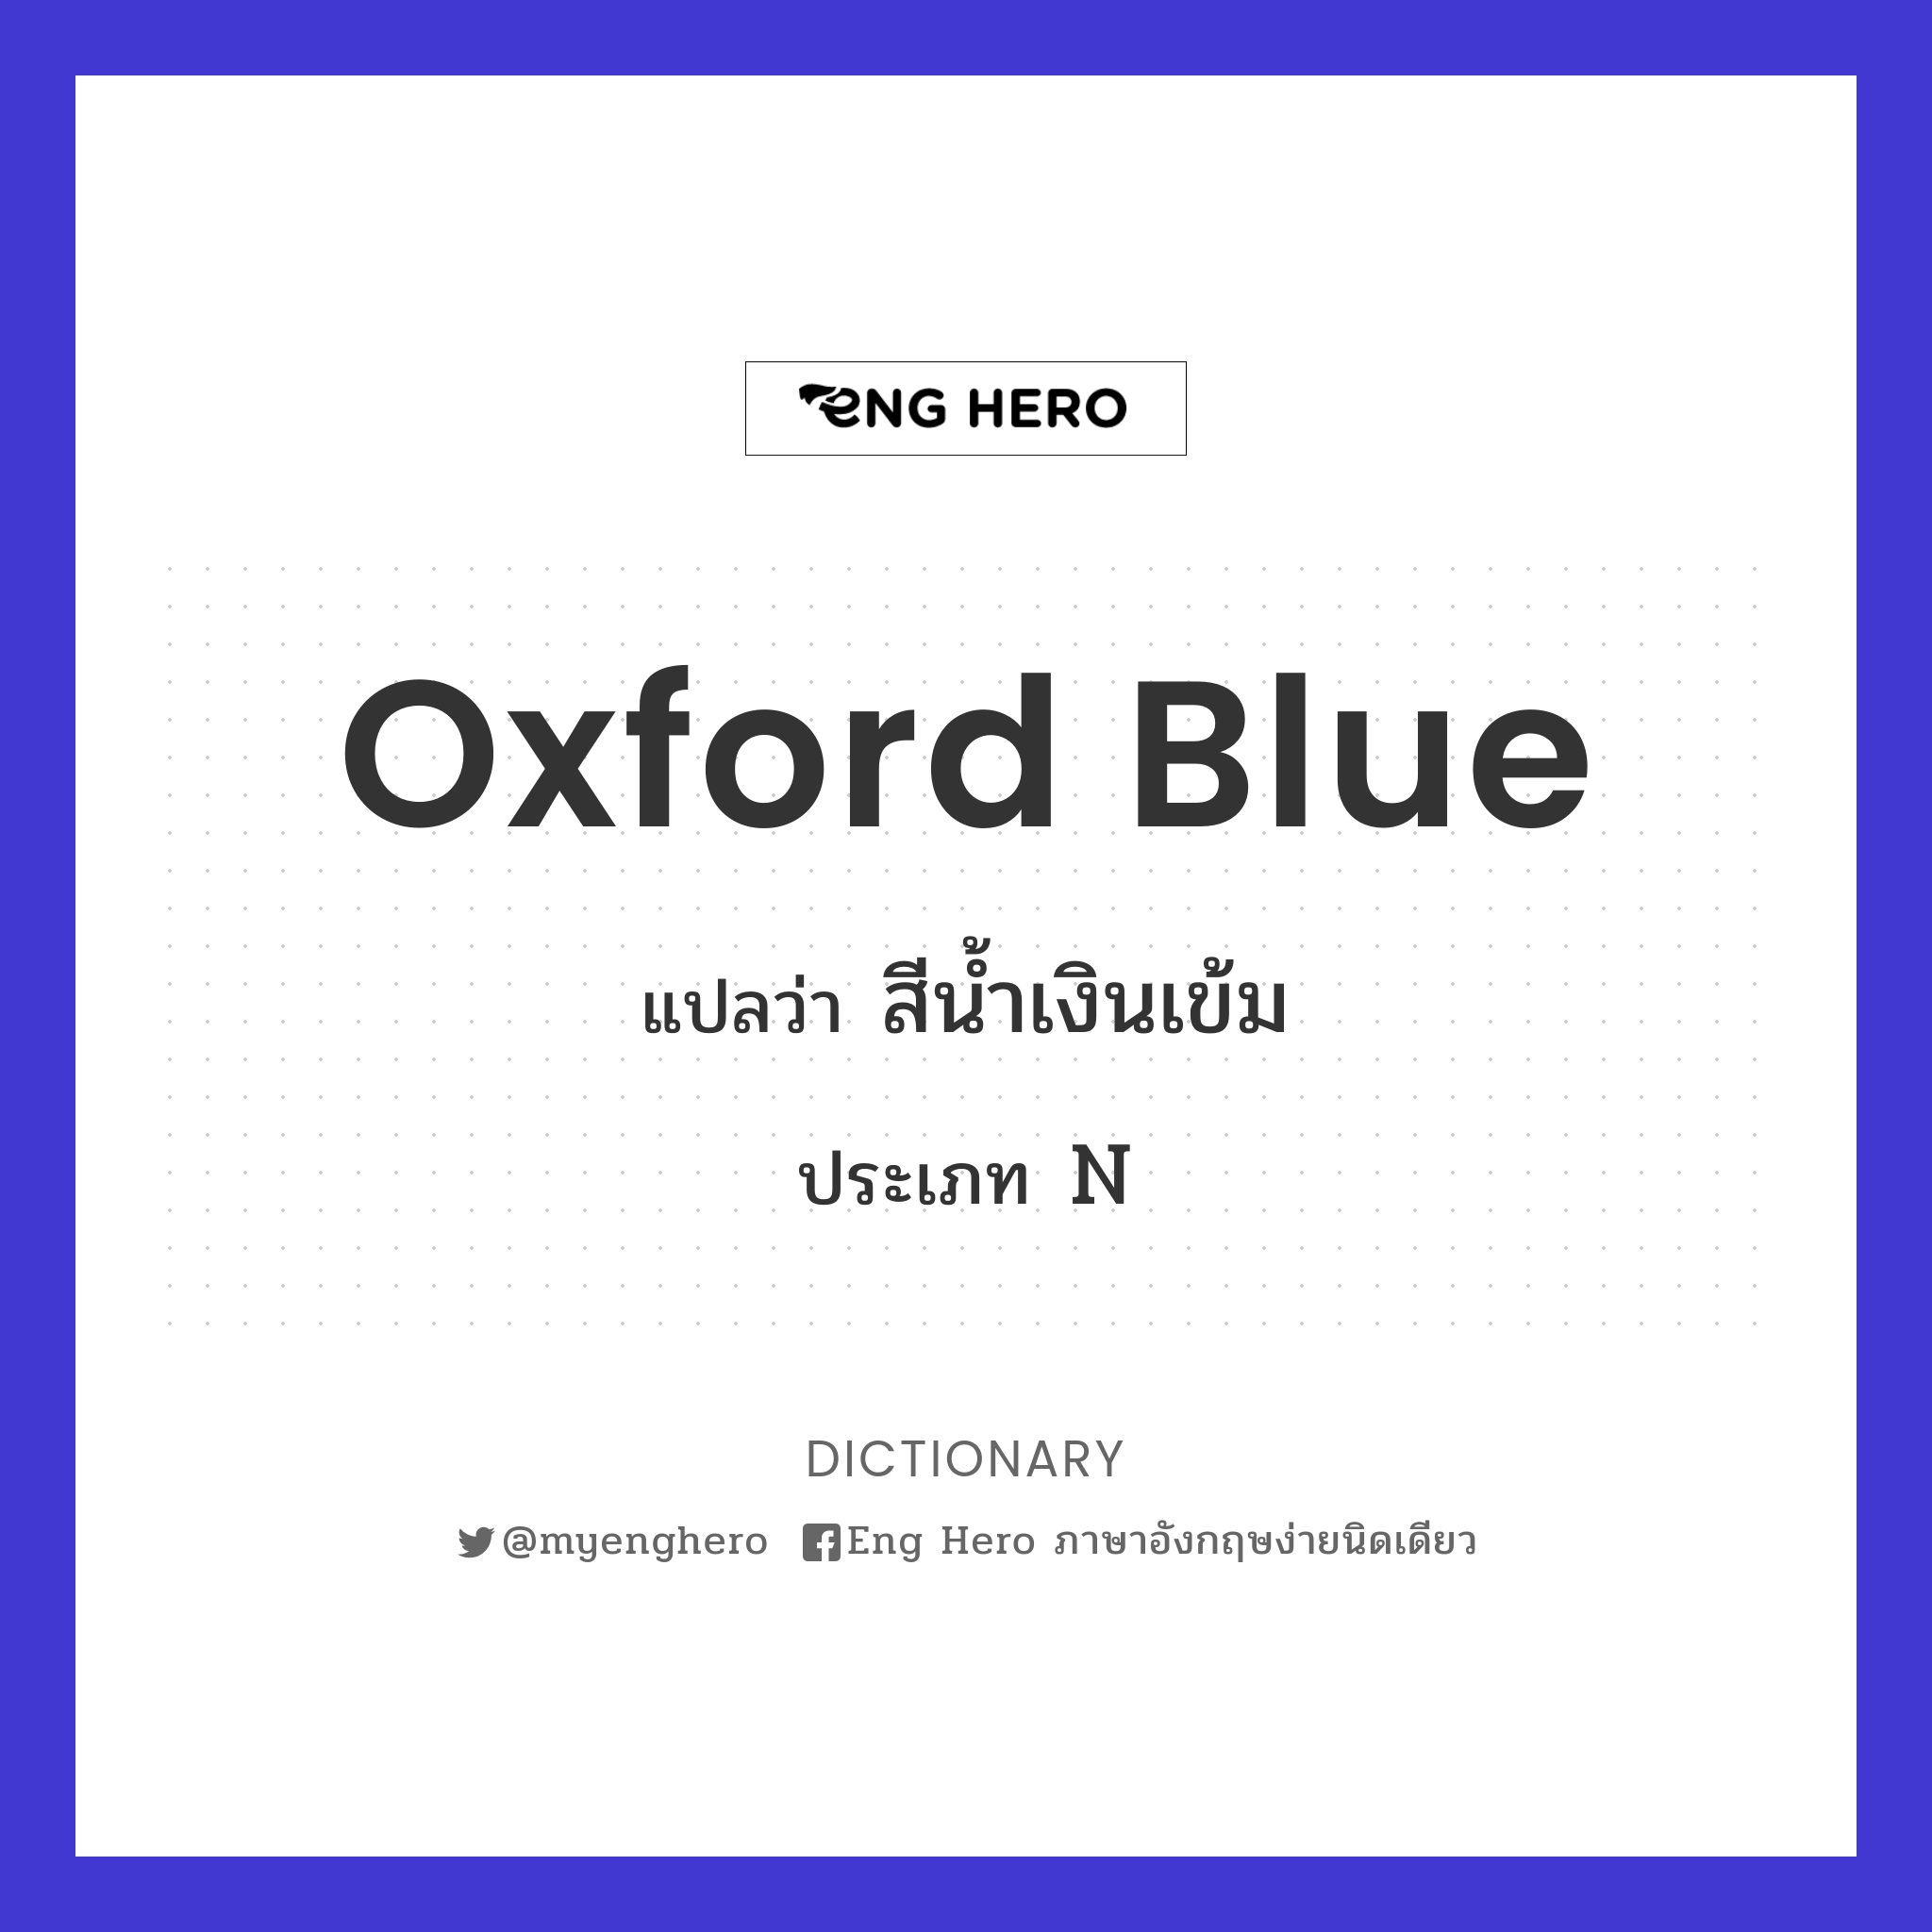 Oxford blue